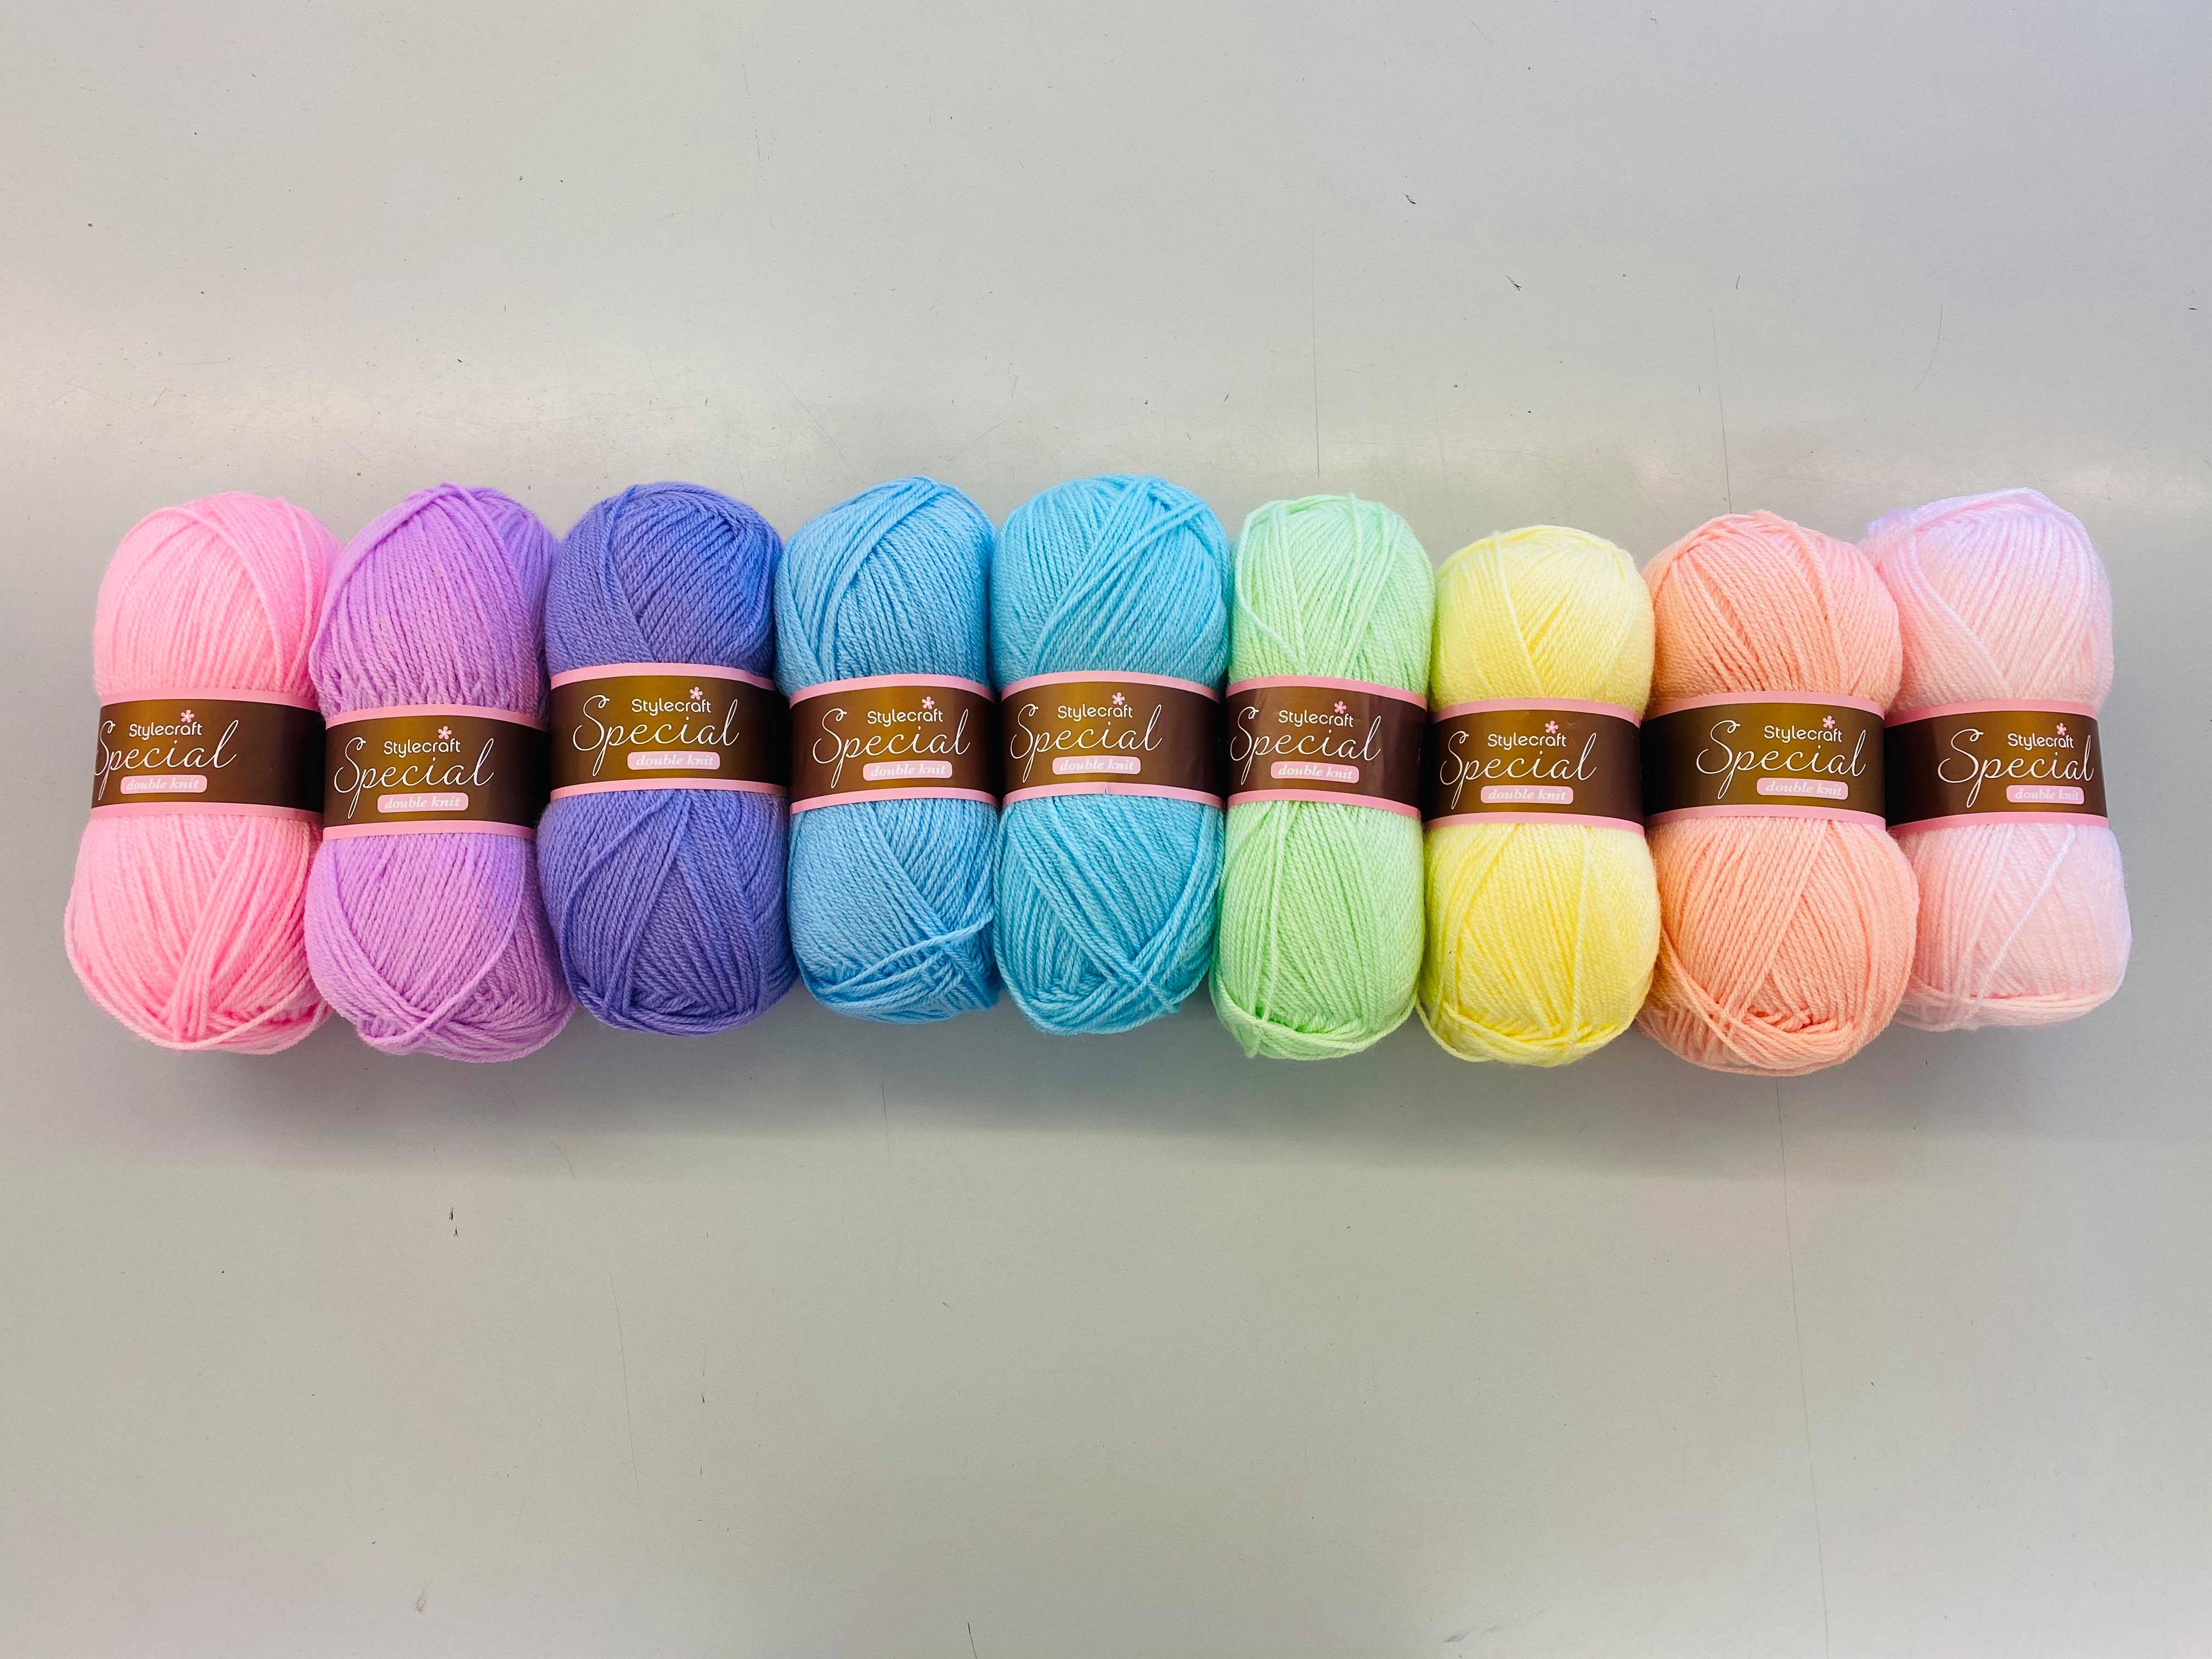 Stylecraft Special DK Pastel Rainbow Set - Soft Peach, Apricot, Lemon, Spring Green, Sherbet, Cloud Blue, Wisteria, Clematis, Candy Floss 